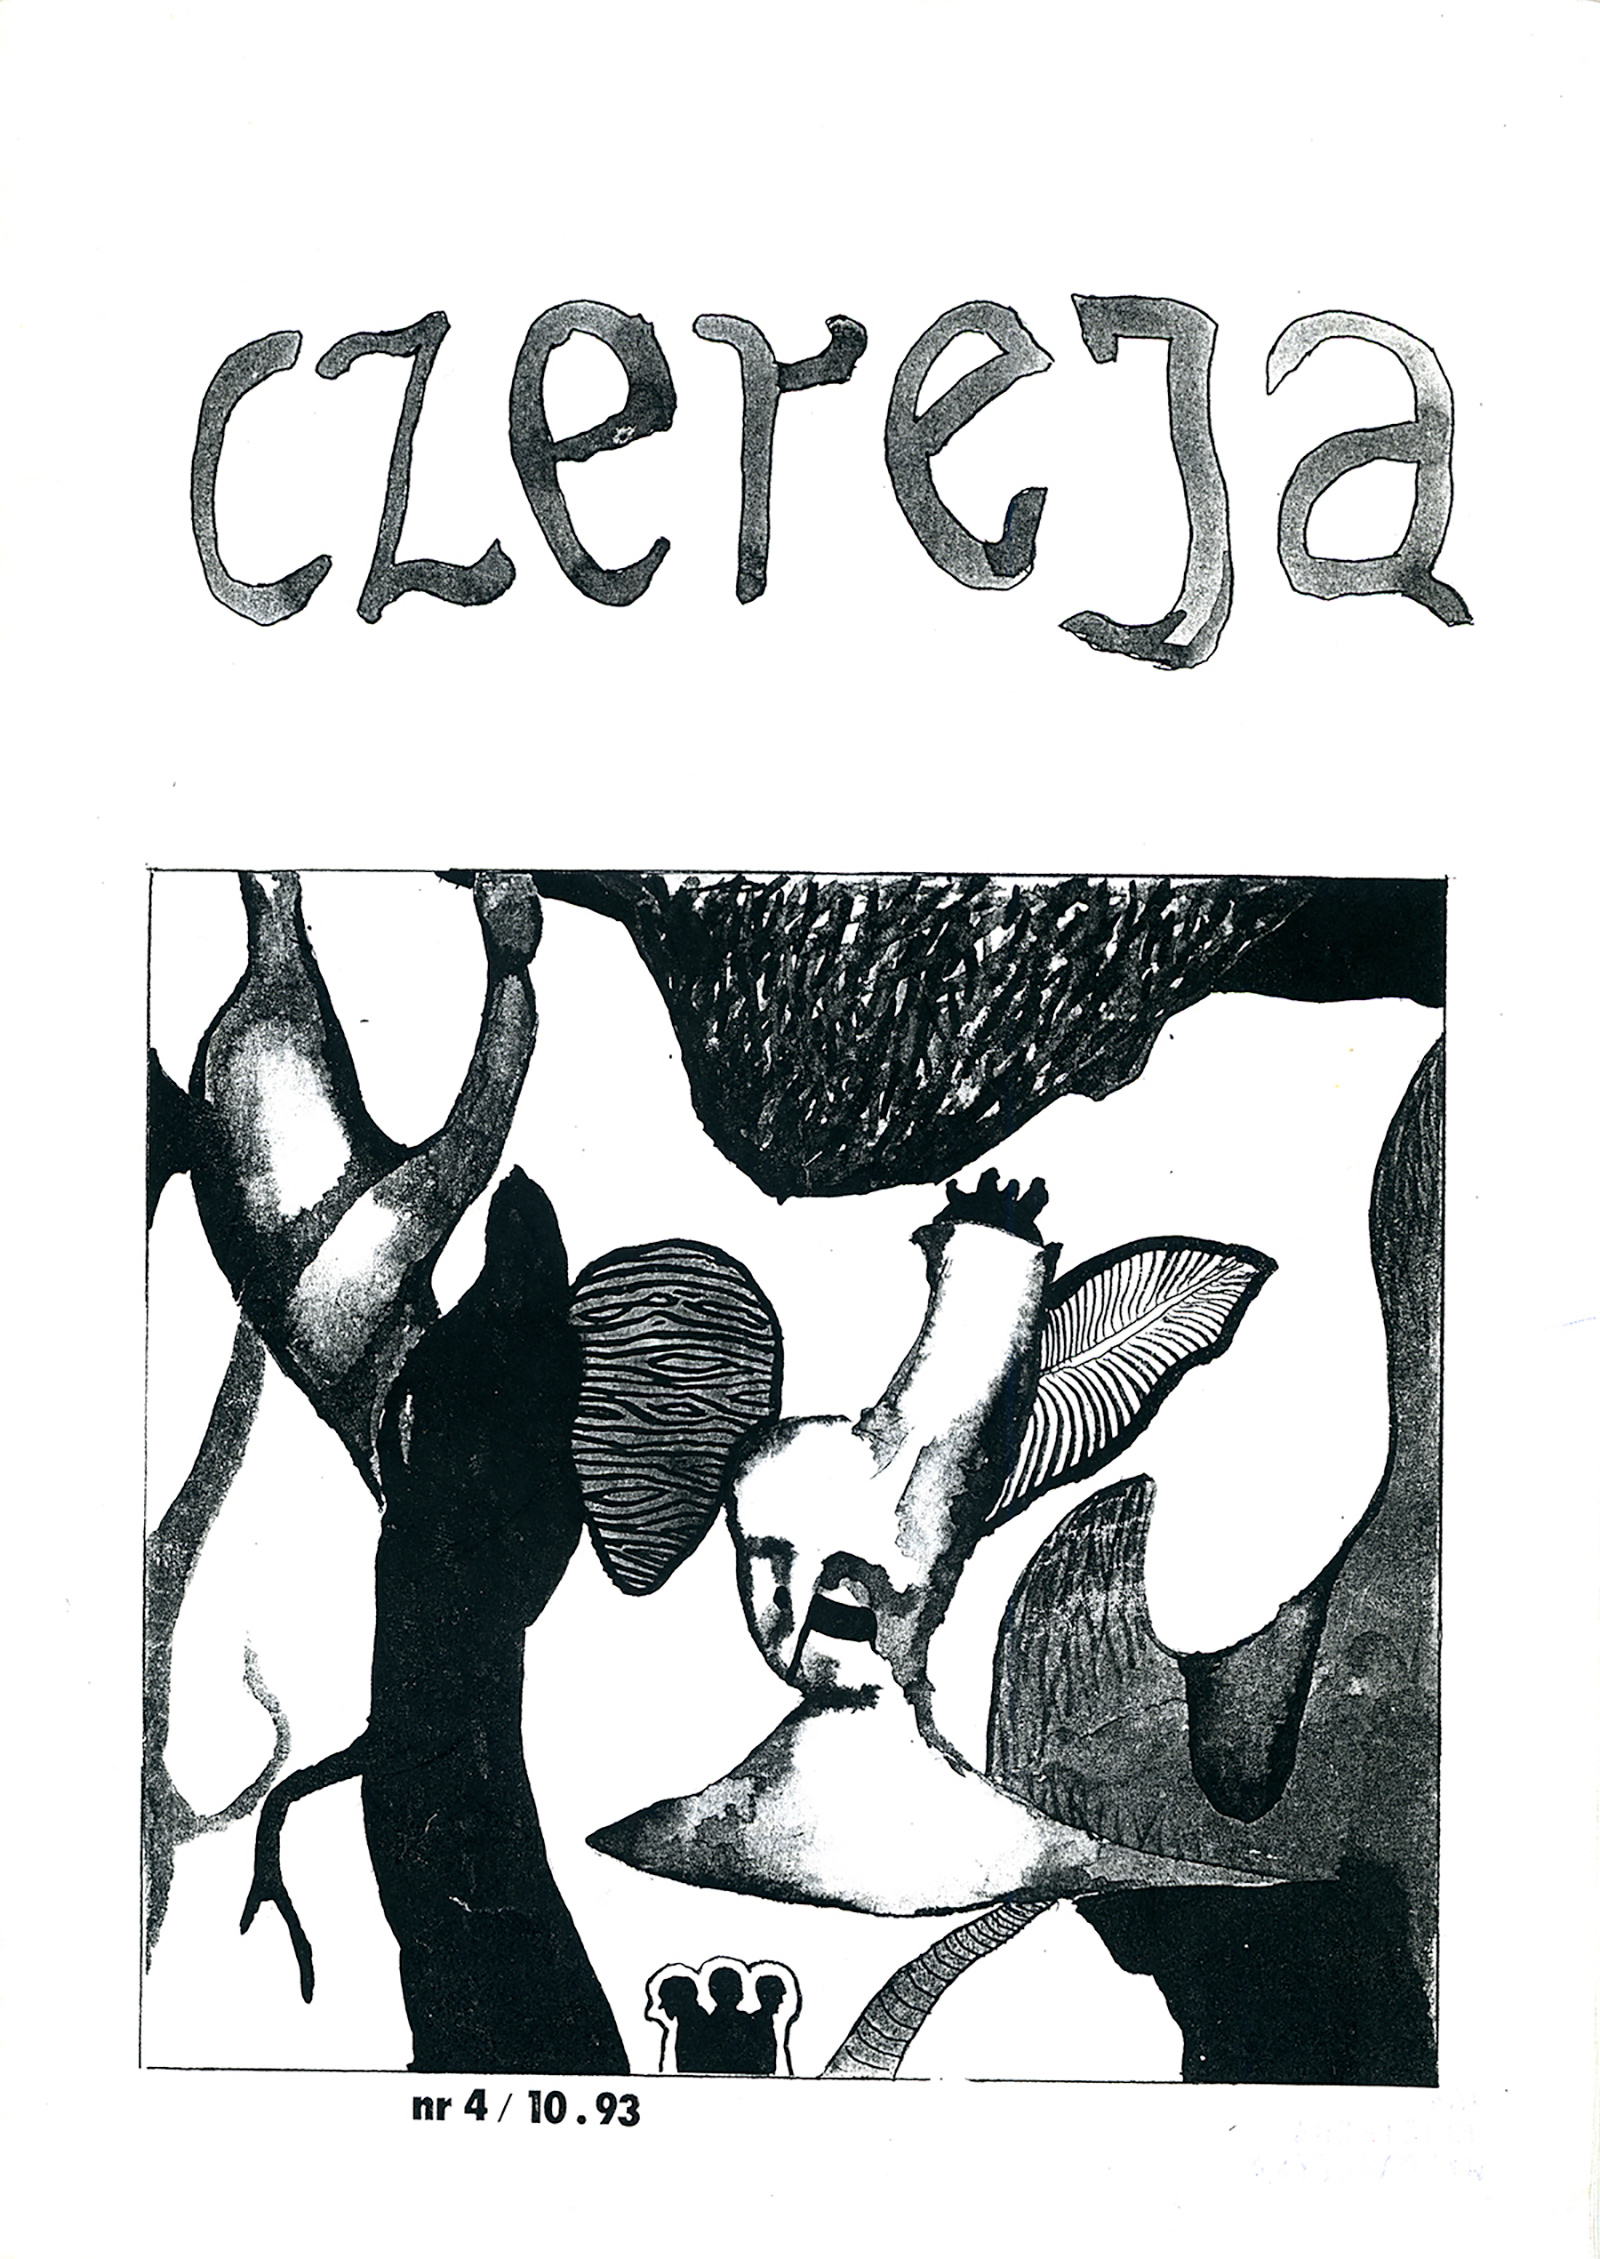 Ilya Kabakov. “Czereja” issue 4, 1933. Scanned magazine cover. Image courtesy The Museum of Modern Art in Warsaw.